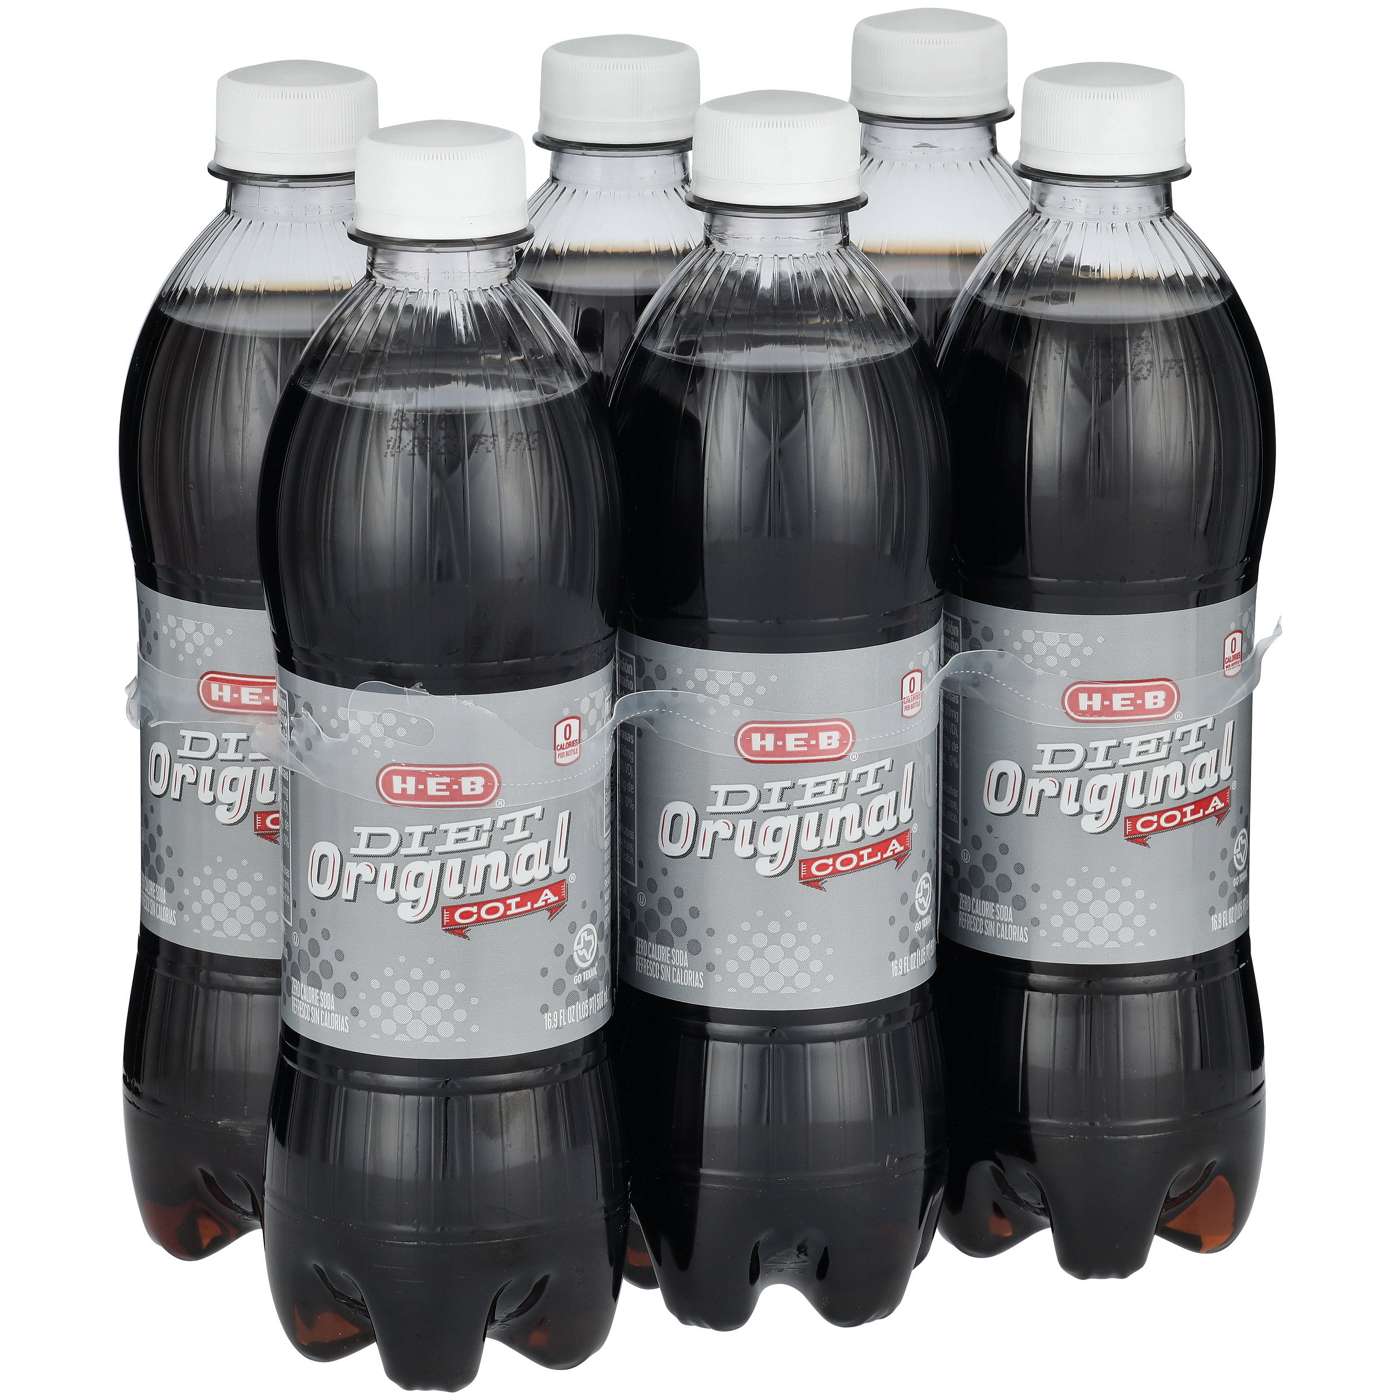 H-E-B Diet Original Cola 6 pk Bottles; image 2 of 2